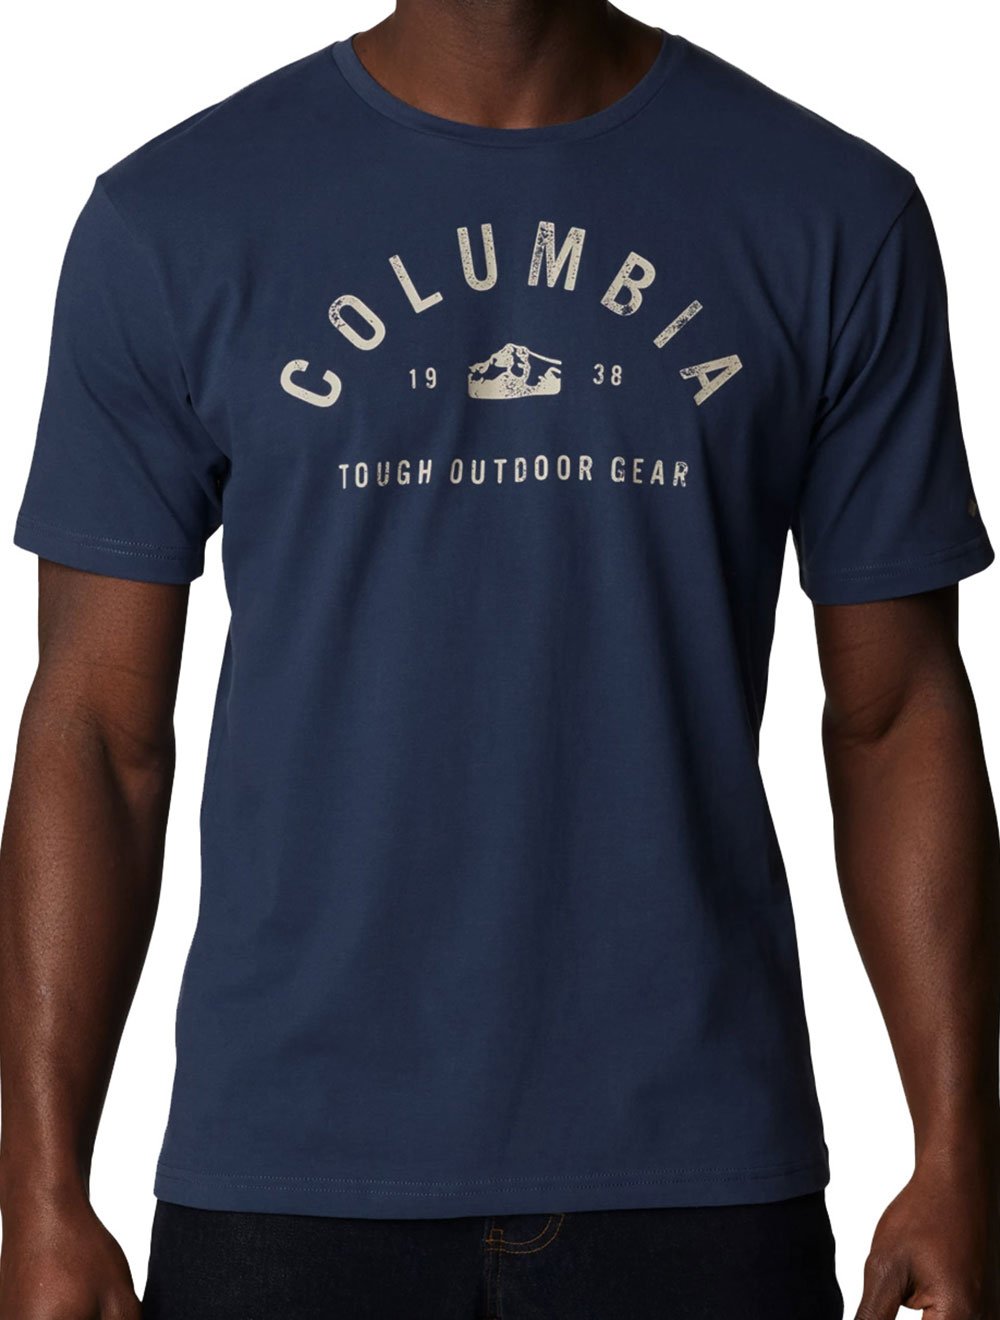 Camiseta Columbia Masculina Dome Tough Outdoor Gear Azul Marinho